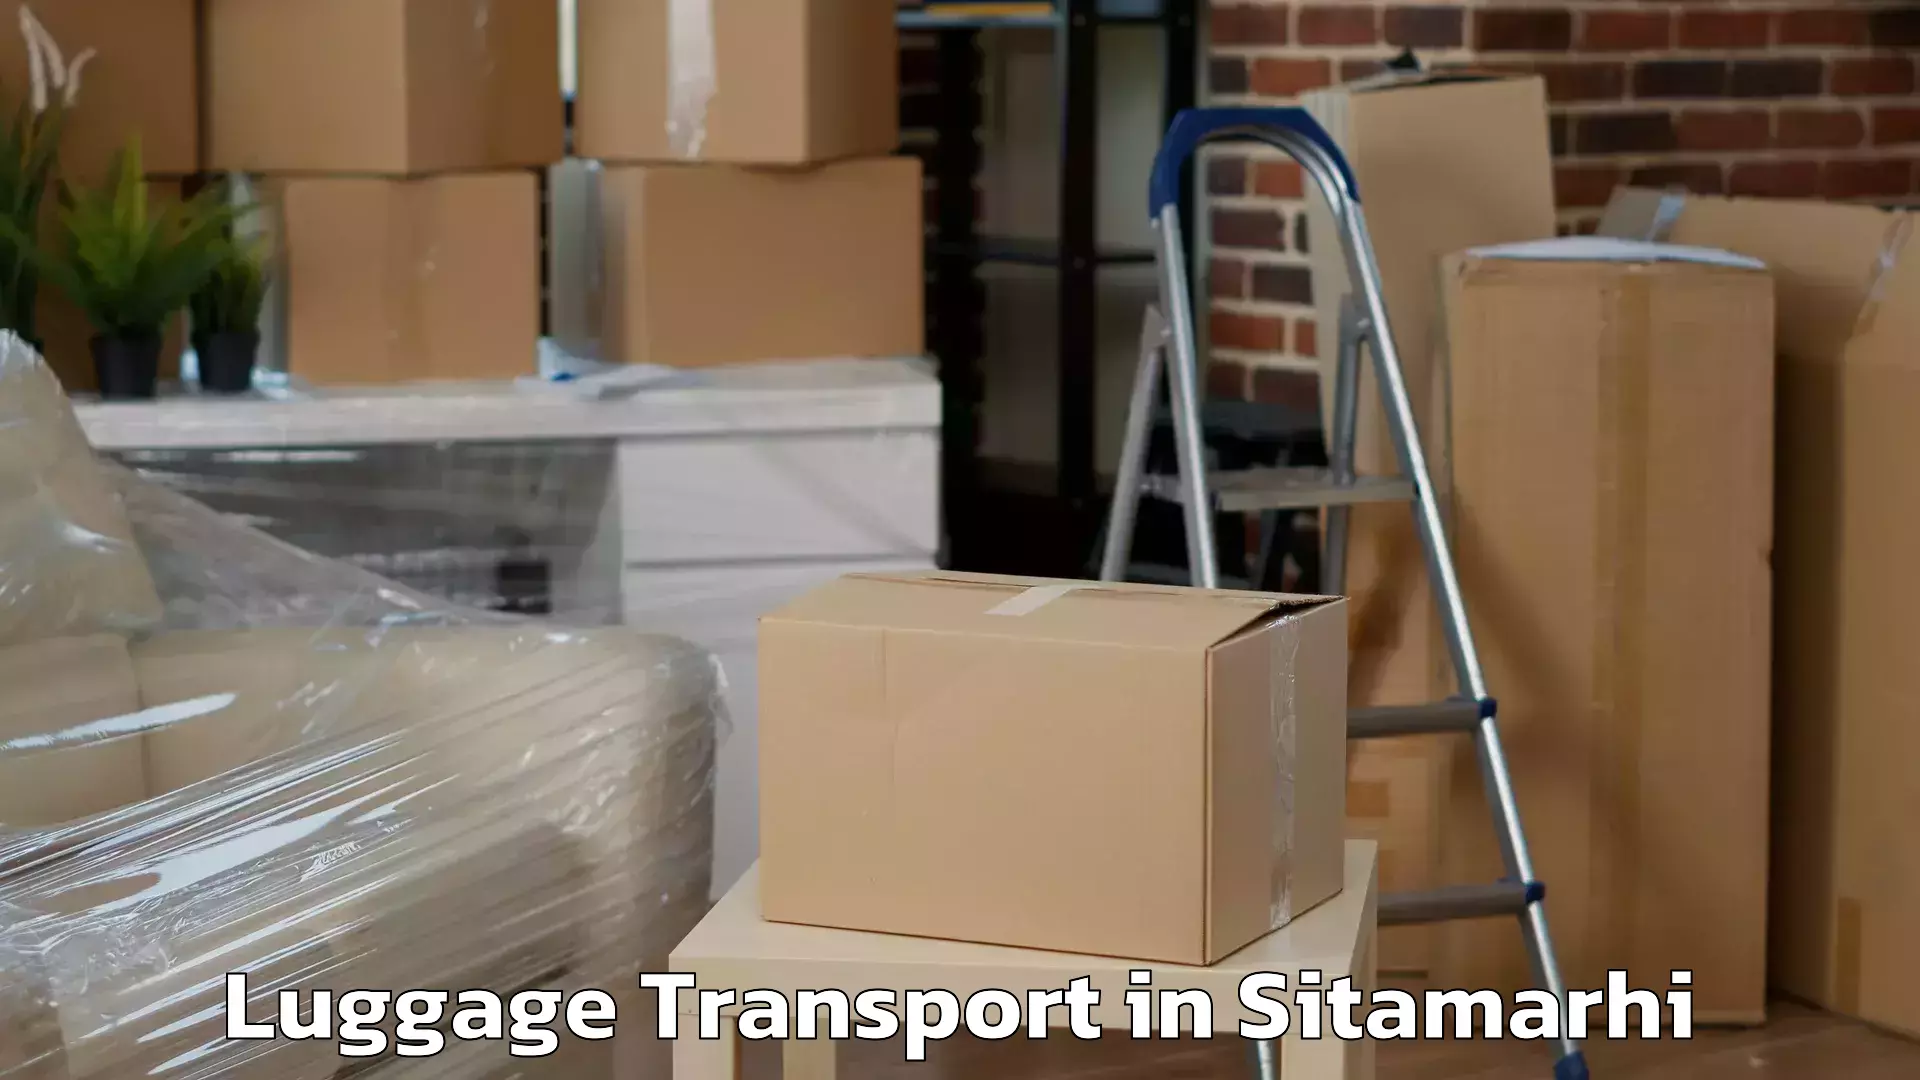 Luggage transport pricing in Sitamarhi